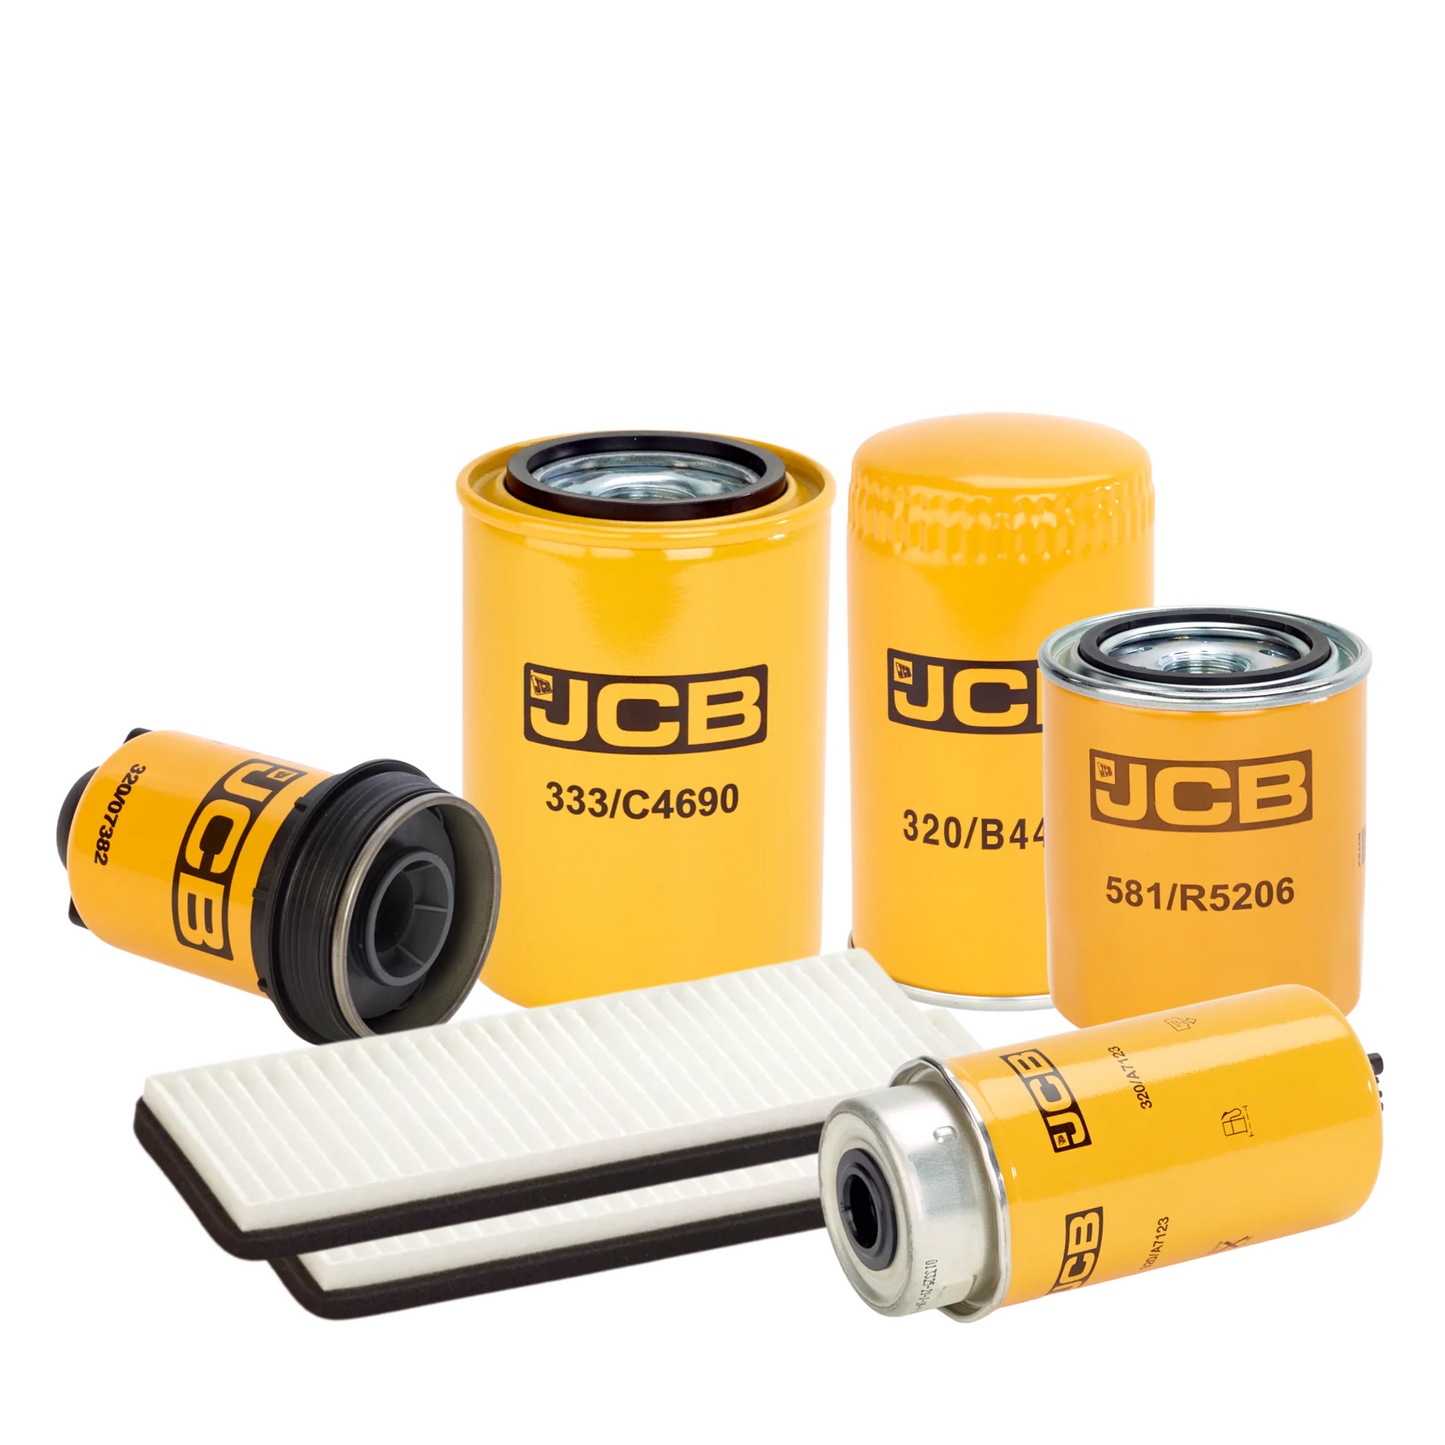 JCB 531-70 8500 Hour Filter Service Kit